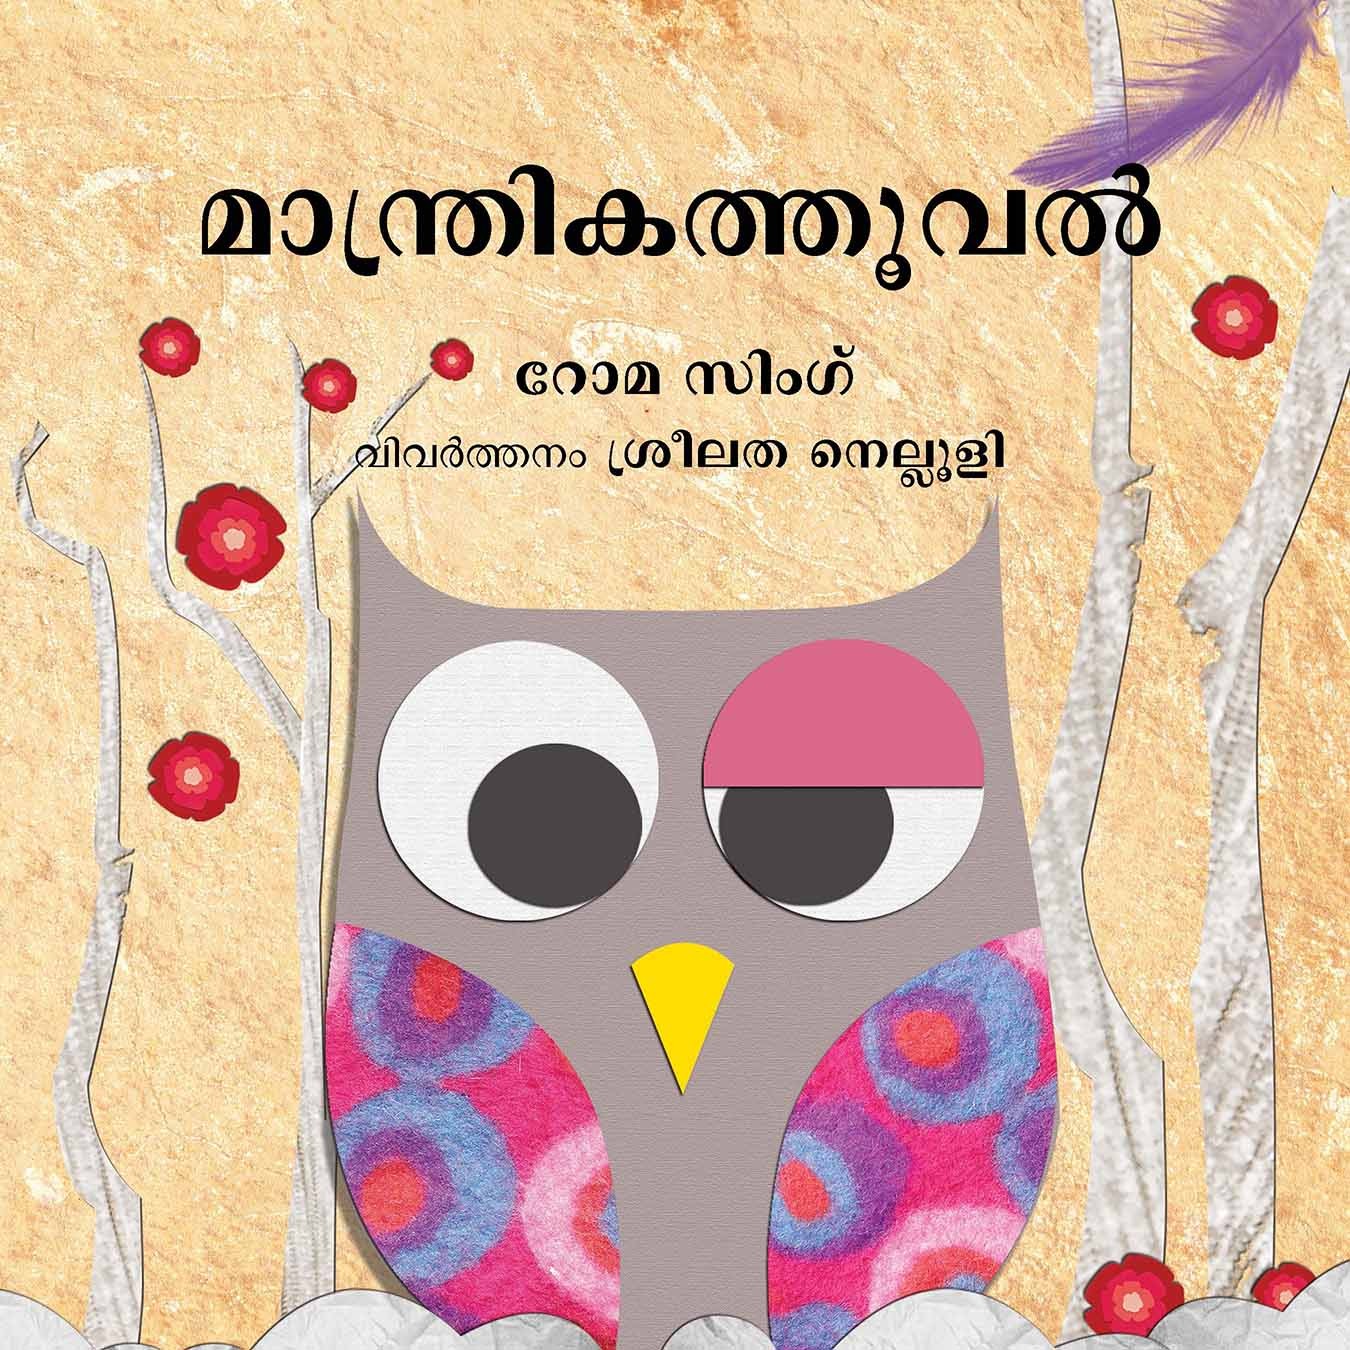 The Magic Feather/Maandrigathaooval (Malayalam)